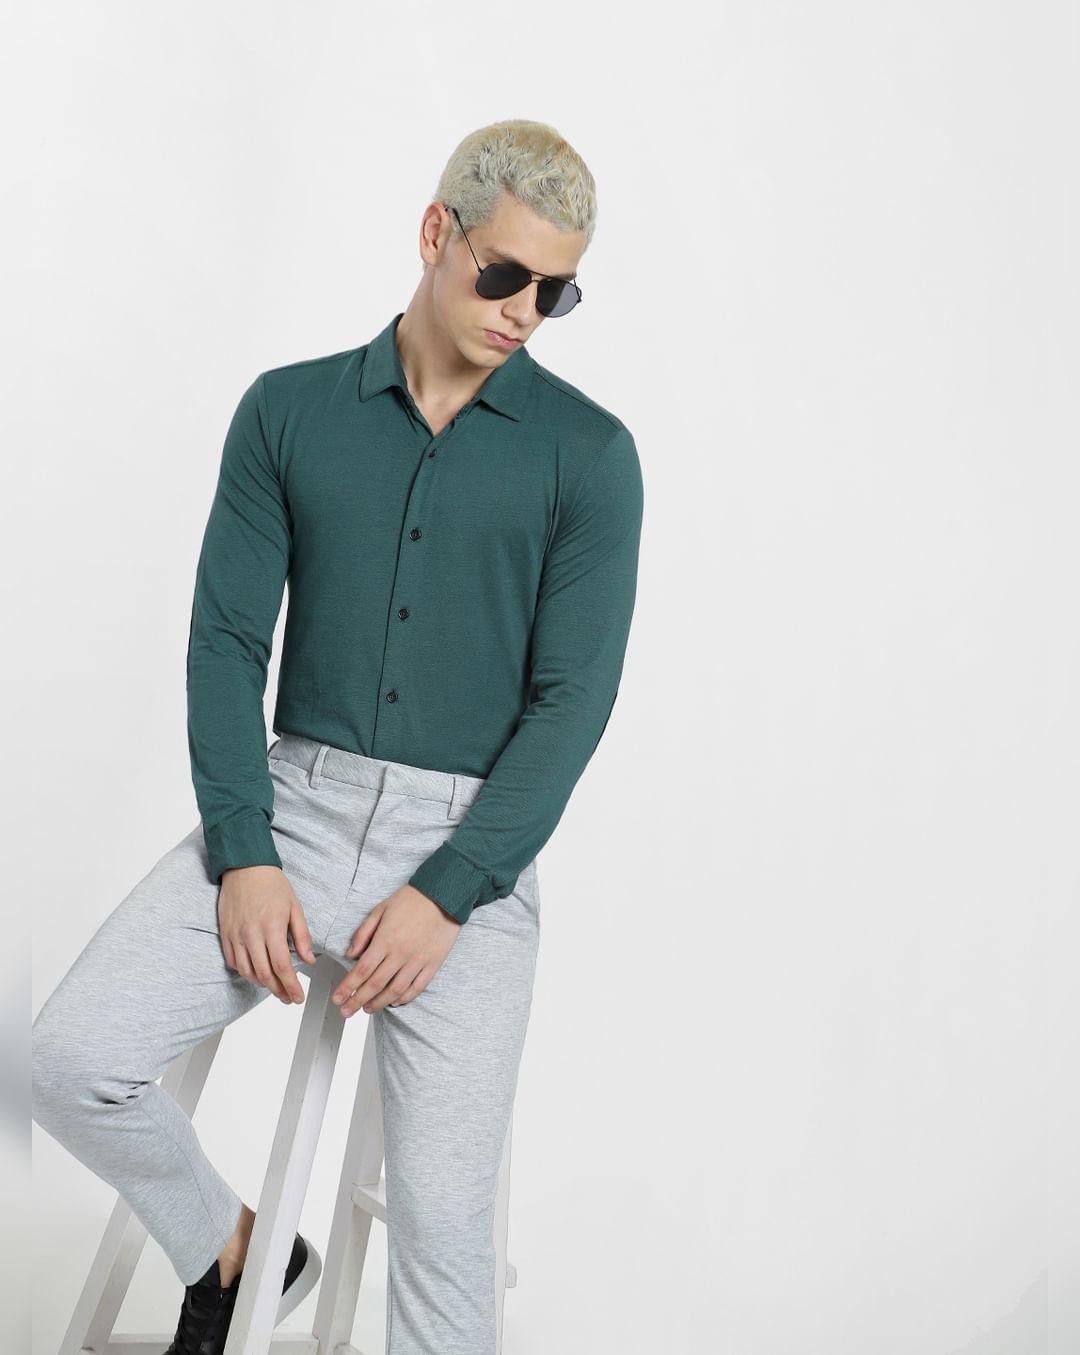 green knit full sleeves shirt